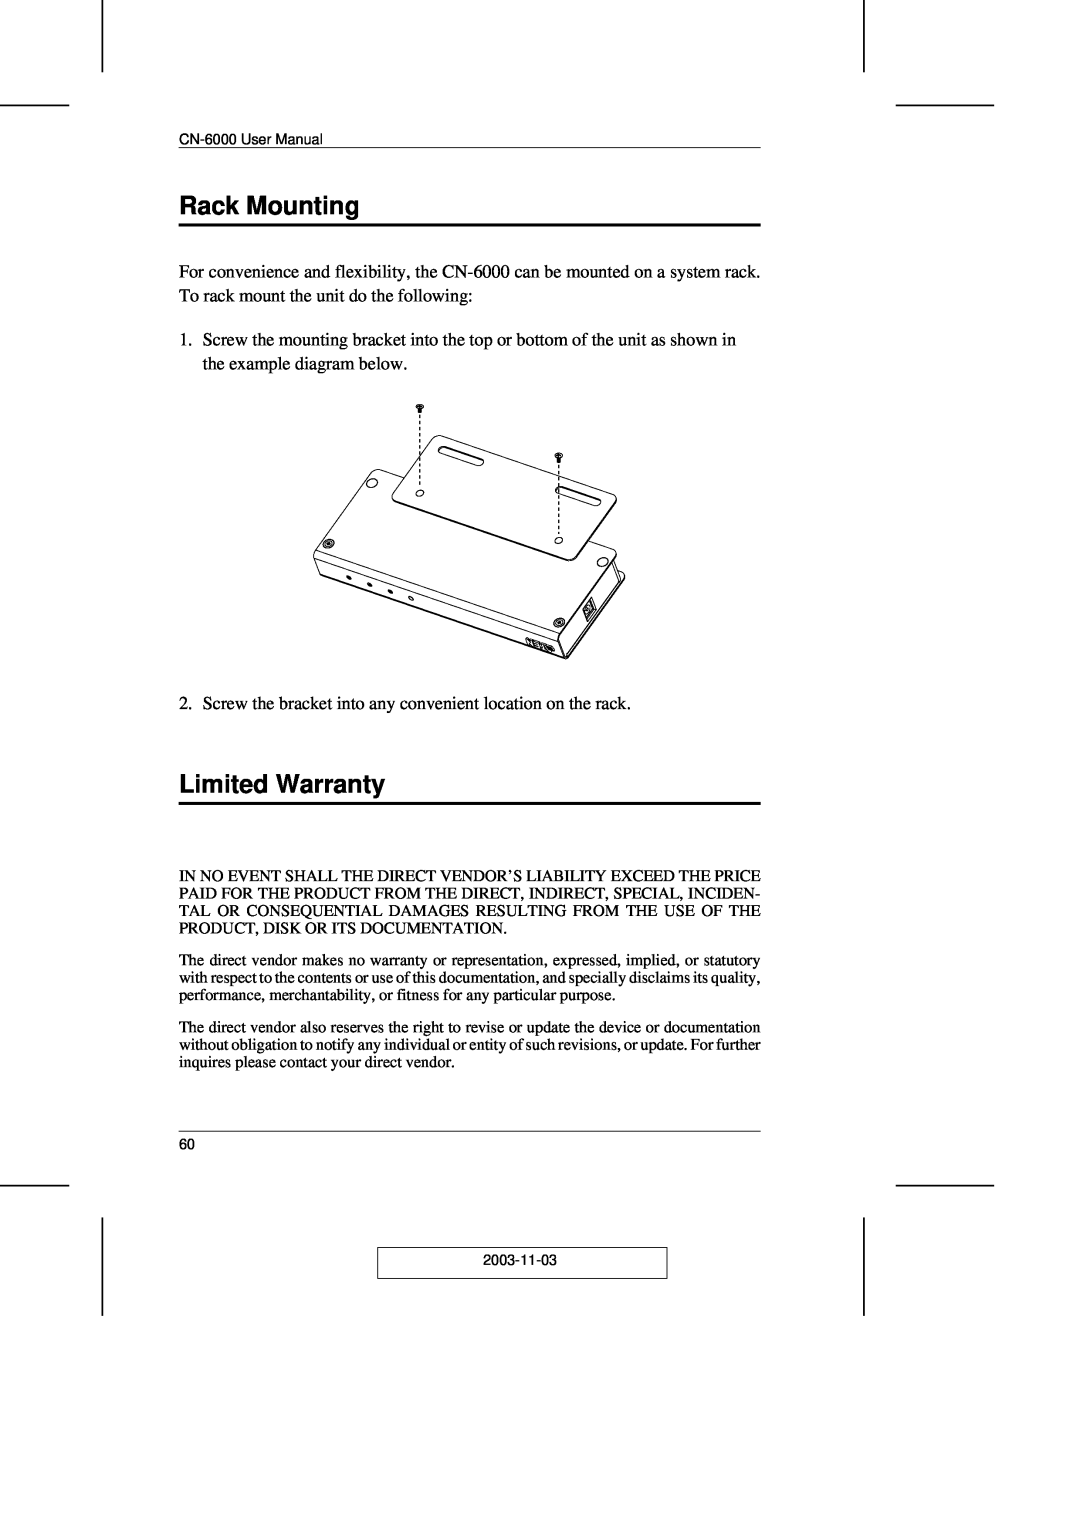 ATEN Technology CN-6000 user manual Rack Mounting, Limited Warranty, 2003-11-03 